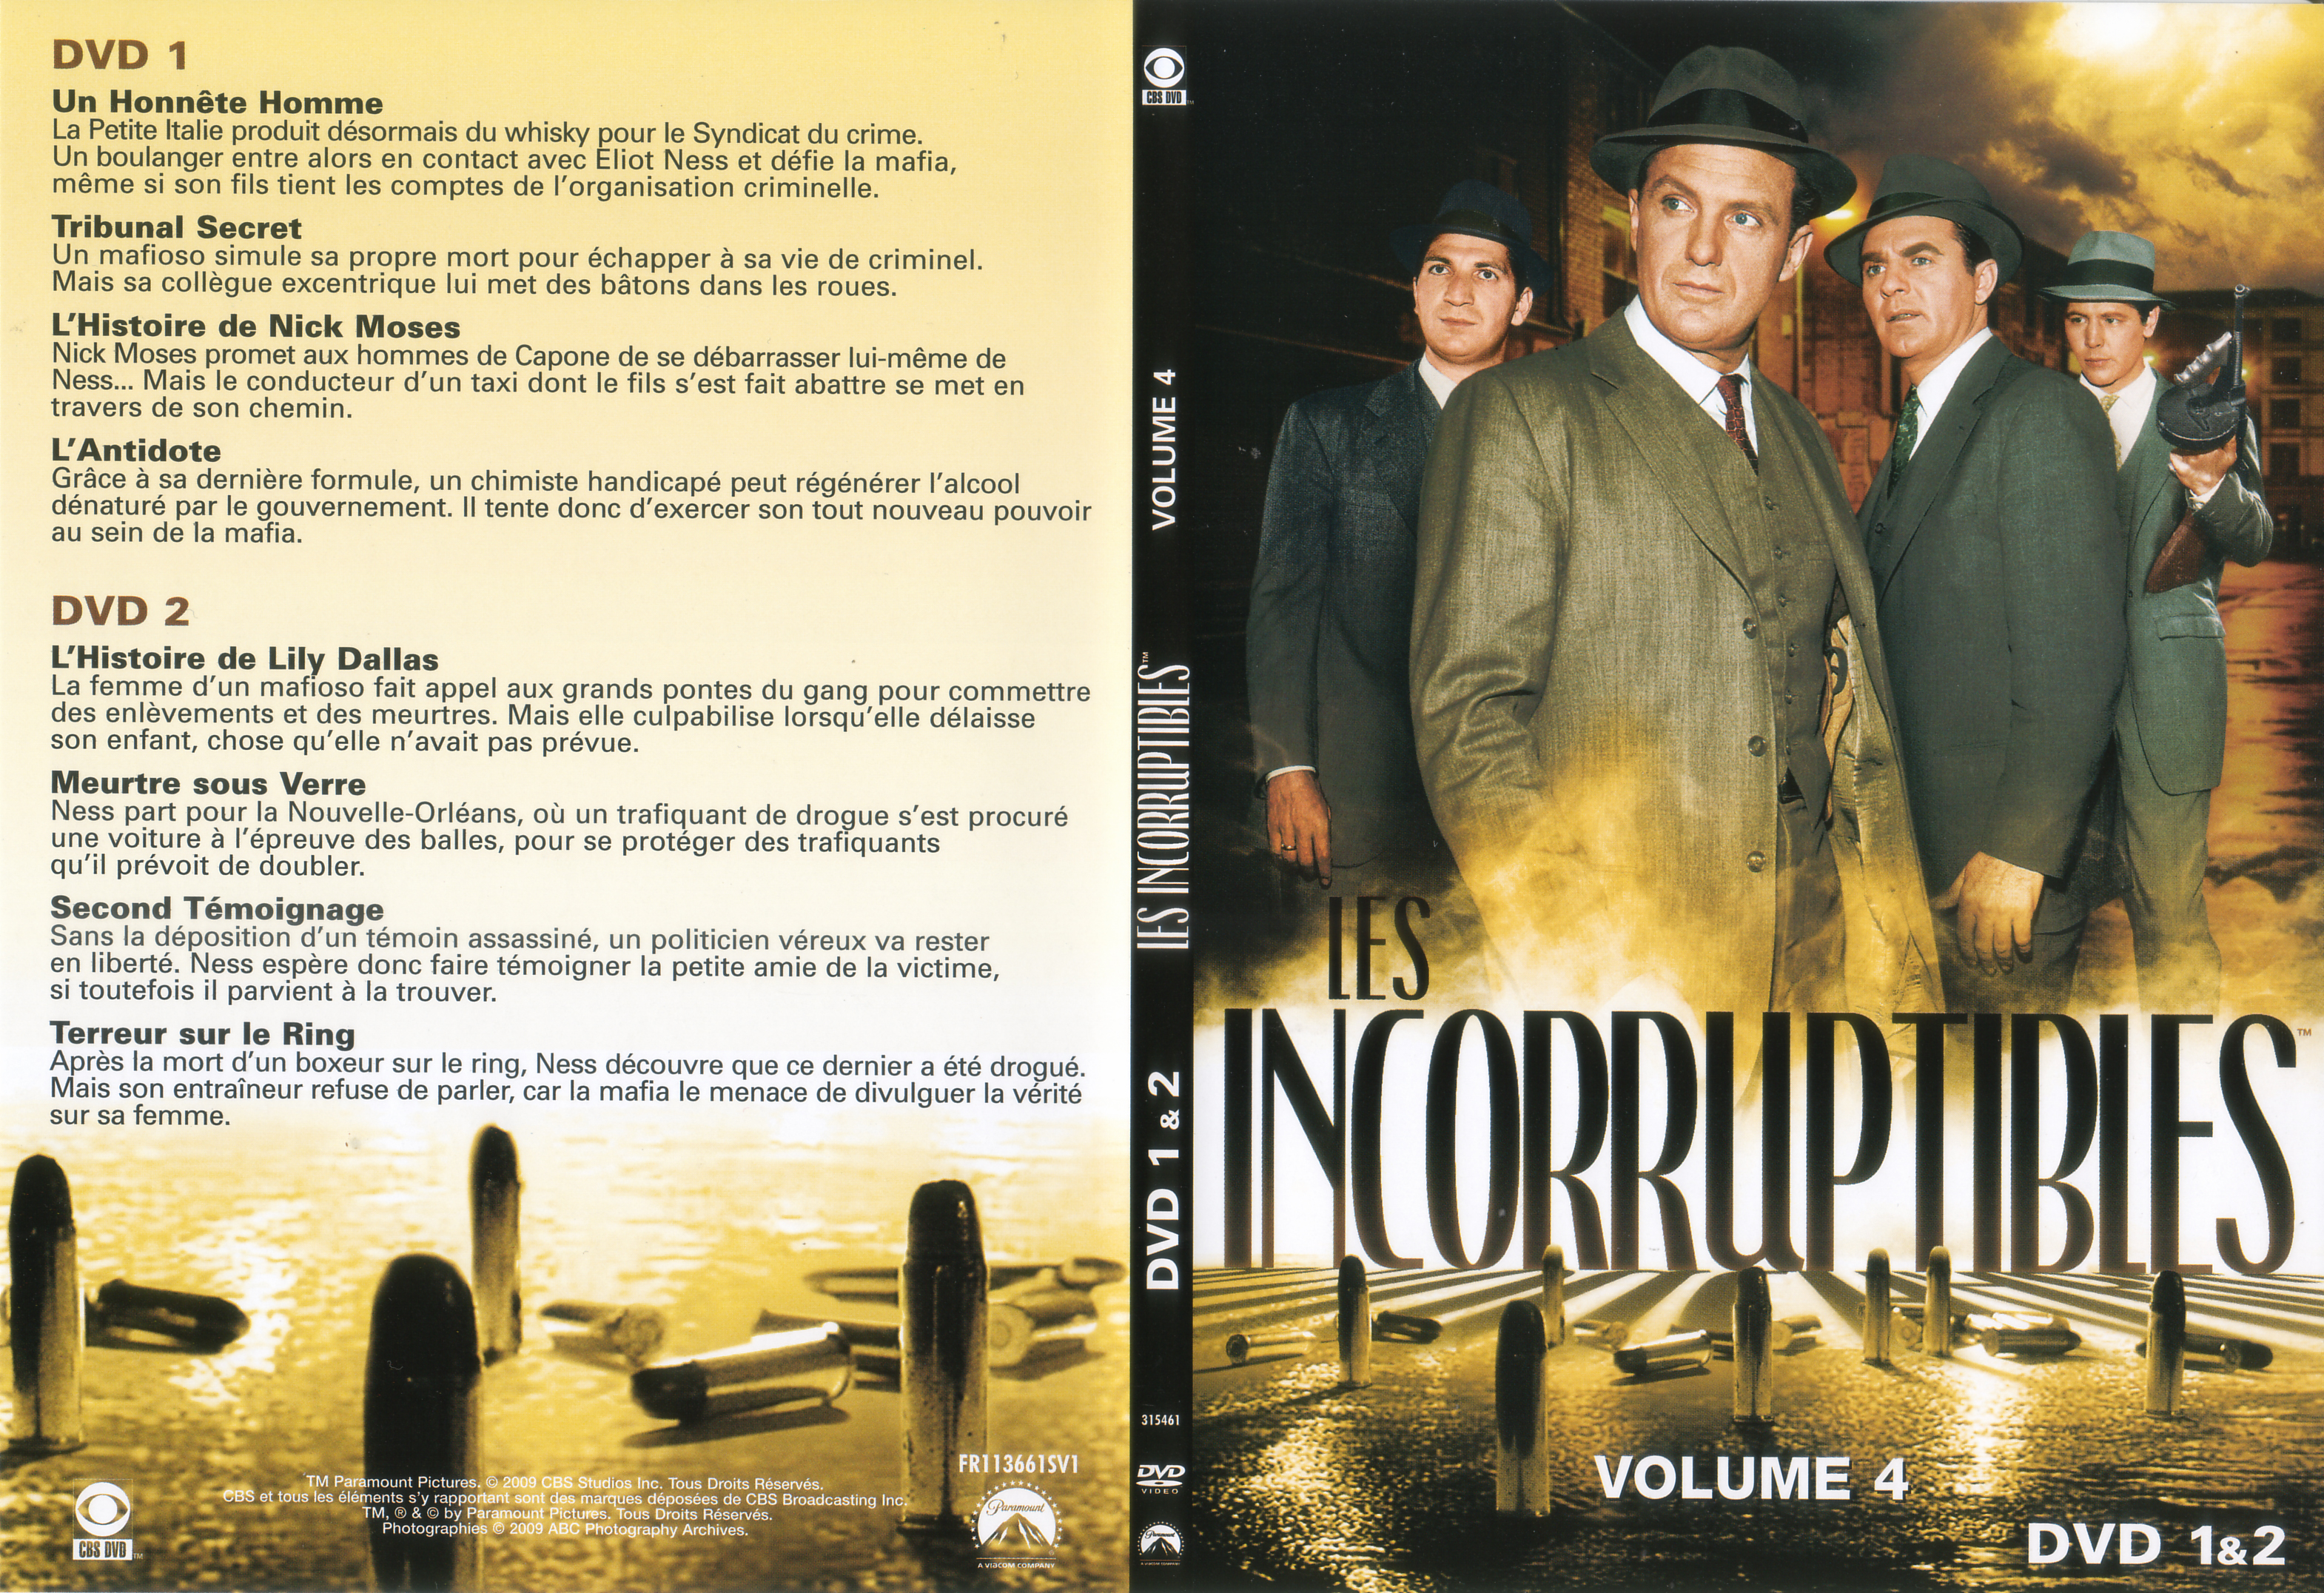 Jaquette DVD Les incorruptibles vol 04 DVD 1